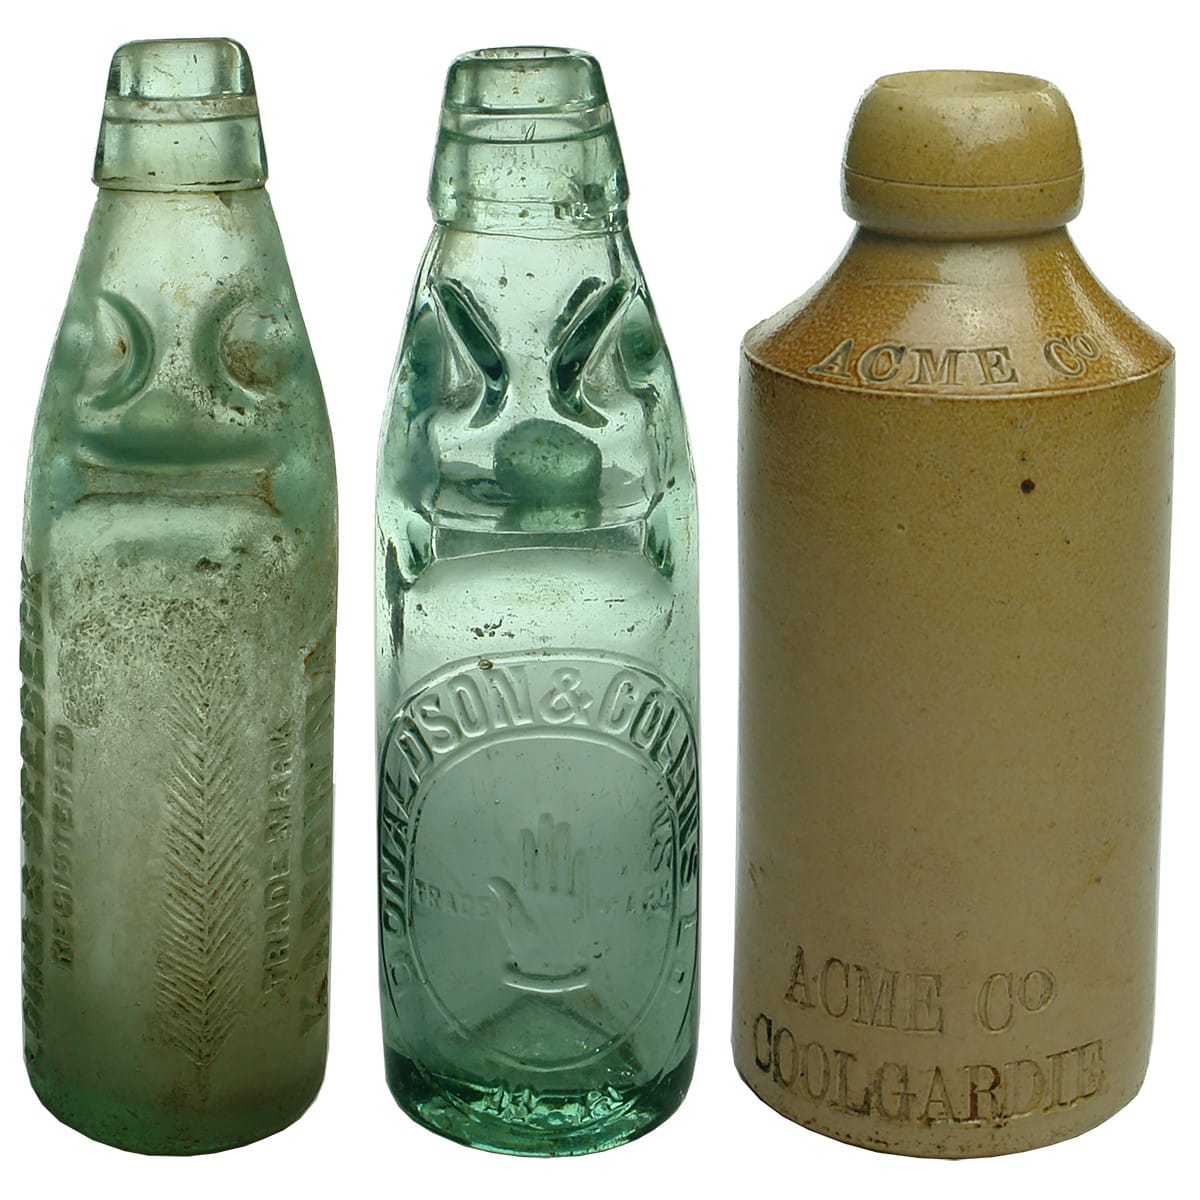 3 Western Australian Bottles: Long & Seebeck Kanowna Codd (replaced top); Donaldson & Collins Codd; Acme Co Coolgardie Ginger Beer. (Western Australia)